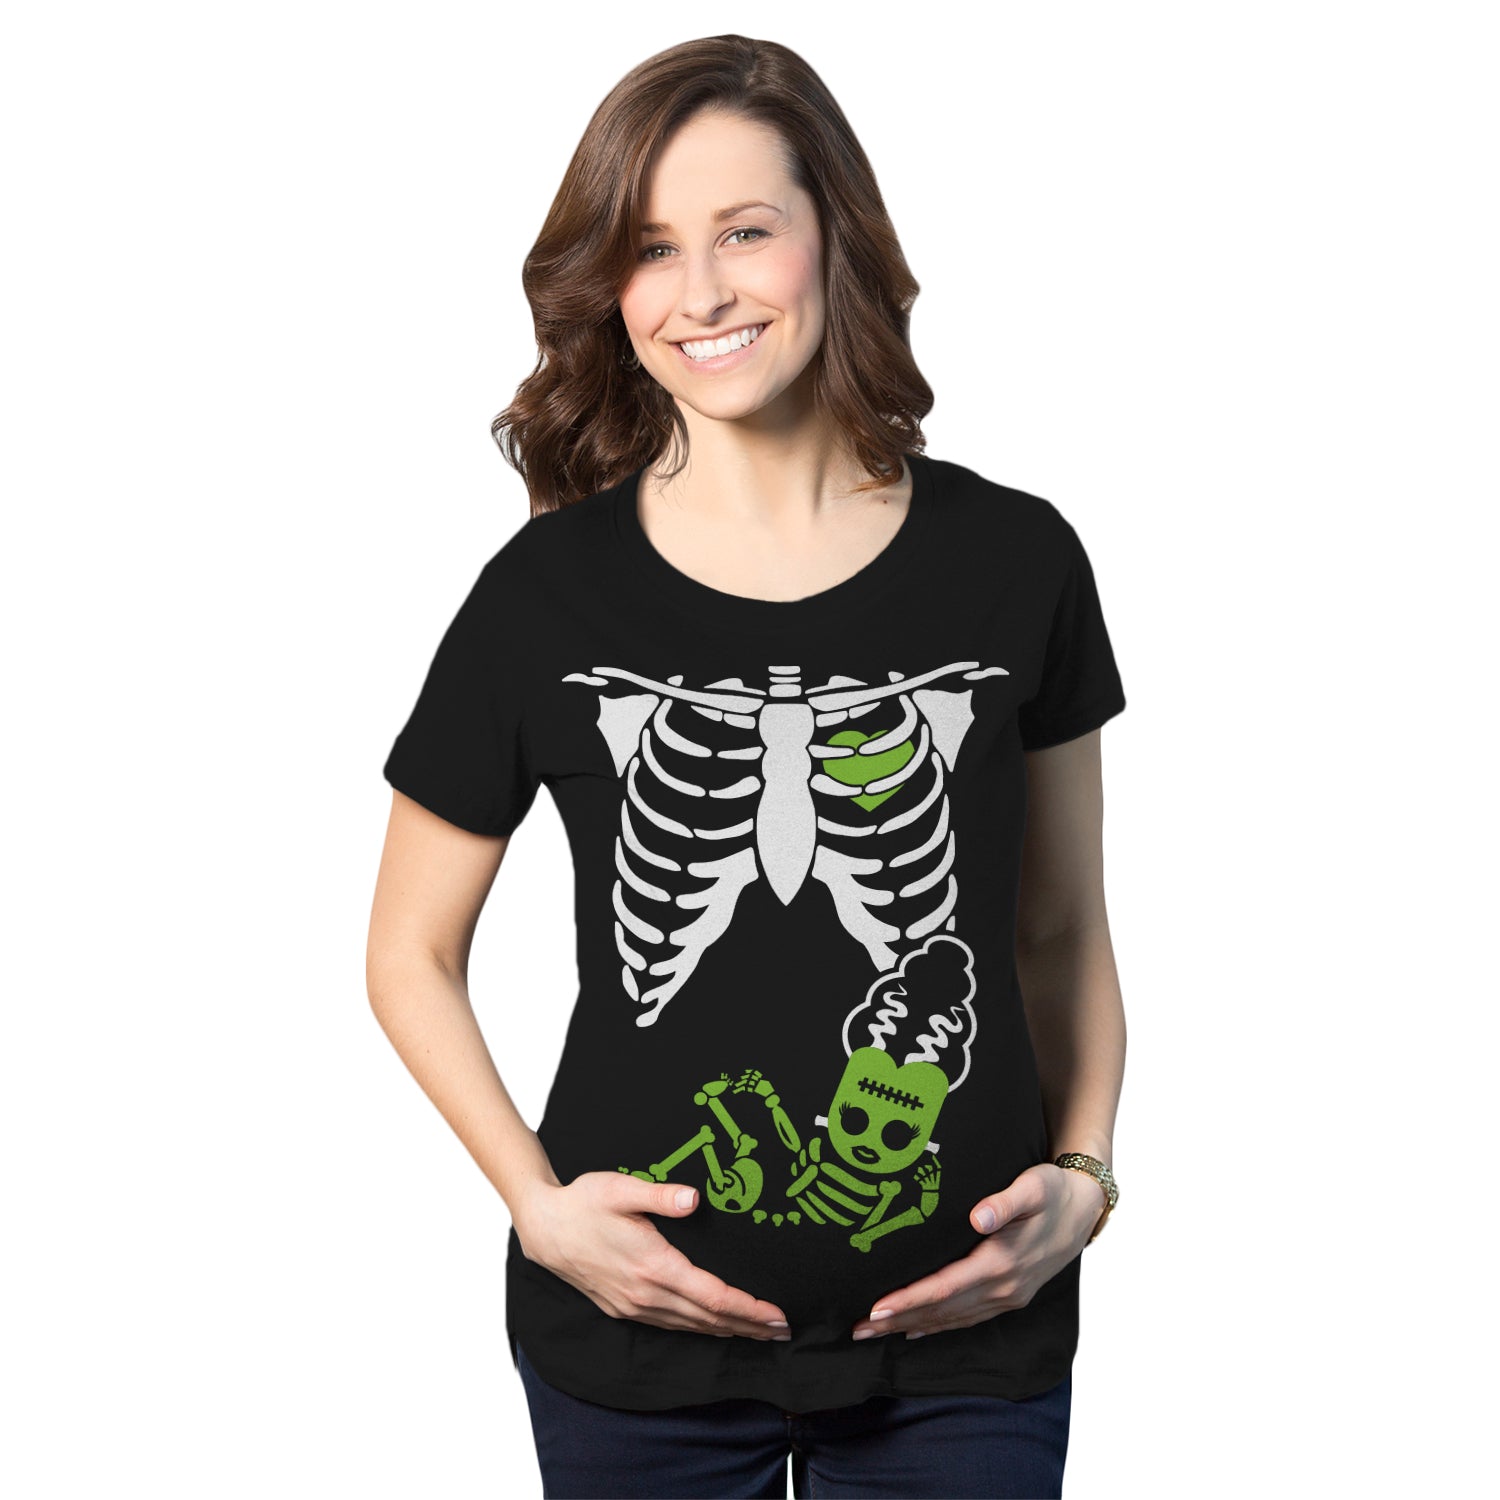 Funny Heather Black - Bride Bride Of Frankenstein Maternity T Shirt Nerdy Halloween TV & Movies Tee